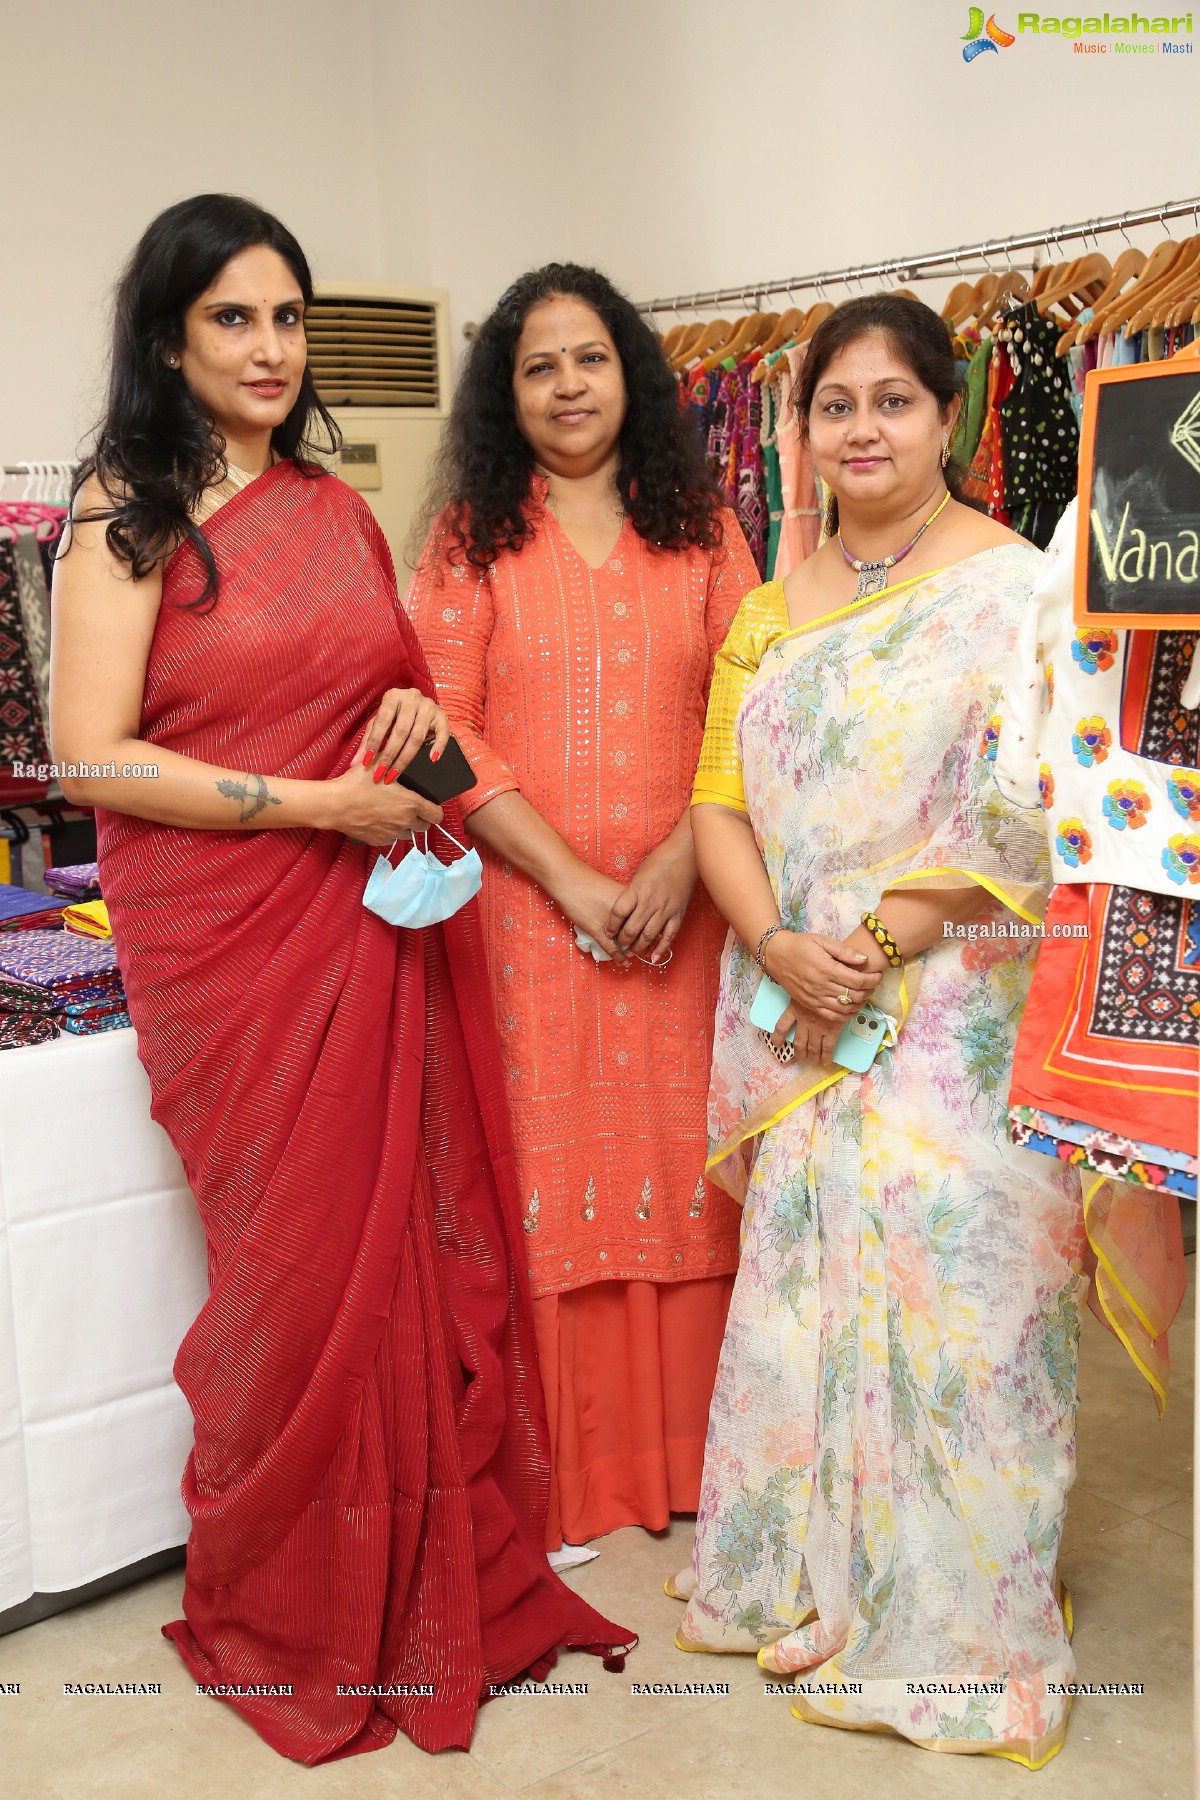 Vastraabharanam Exhibition of Jewellery and Clothing Kicks Off at Yuktalaya, Madhapur, Hyderabad